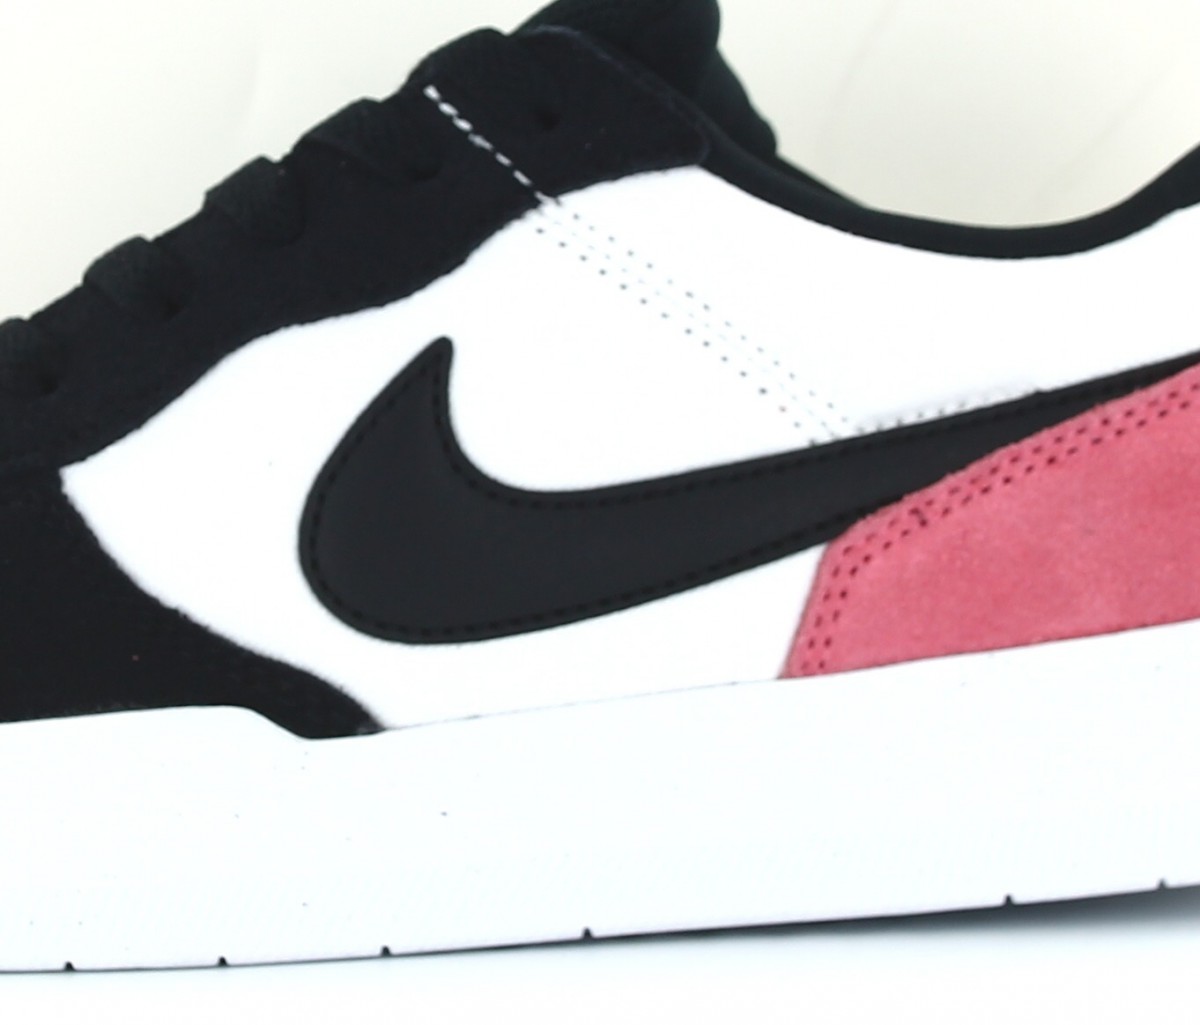 Nike Nike sb force 58 blanc noir rose